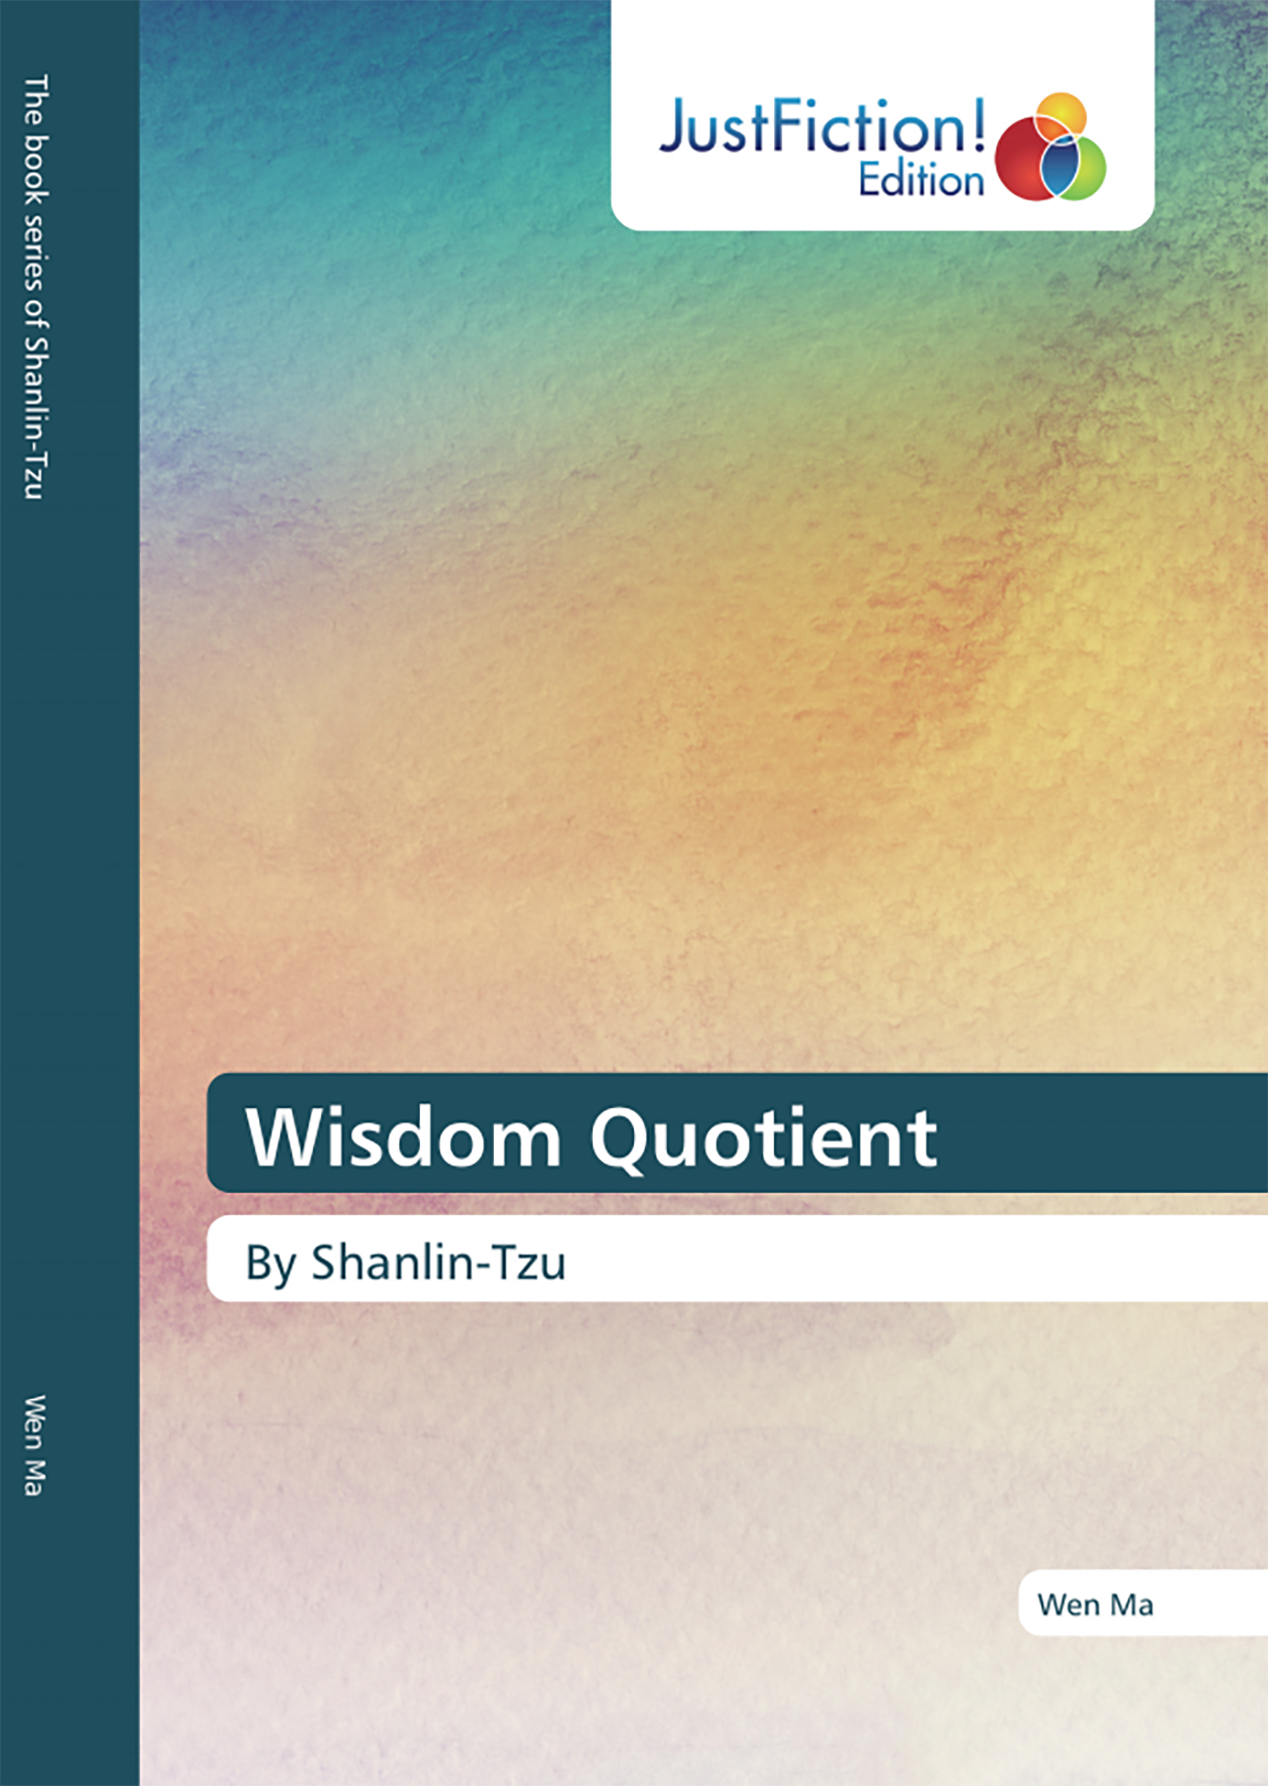 Wisdom Quotient 慧商